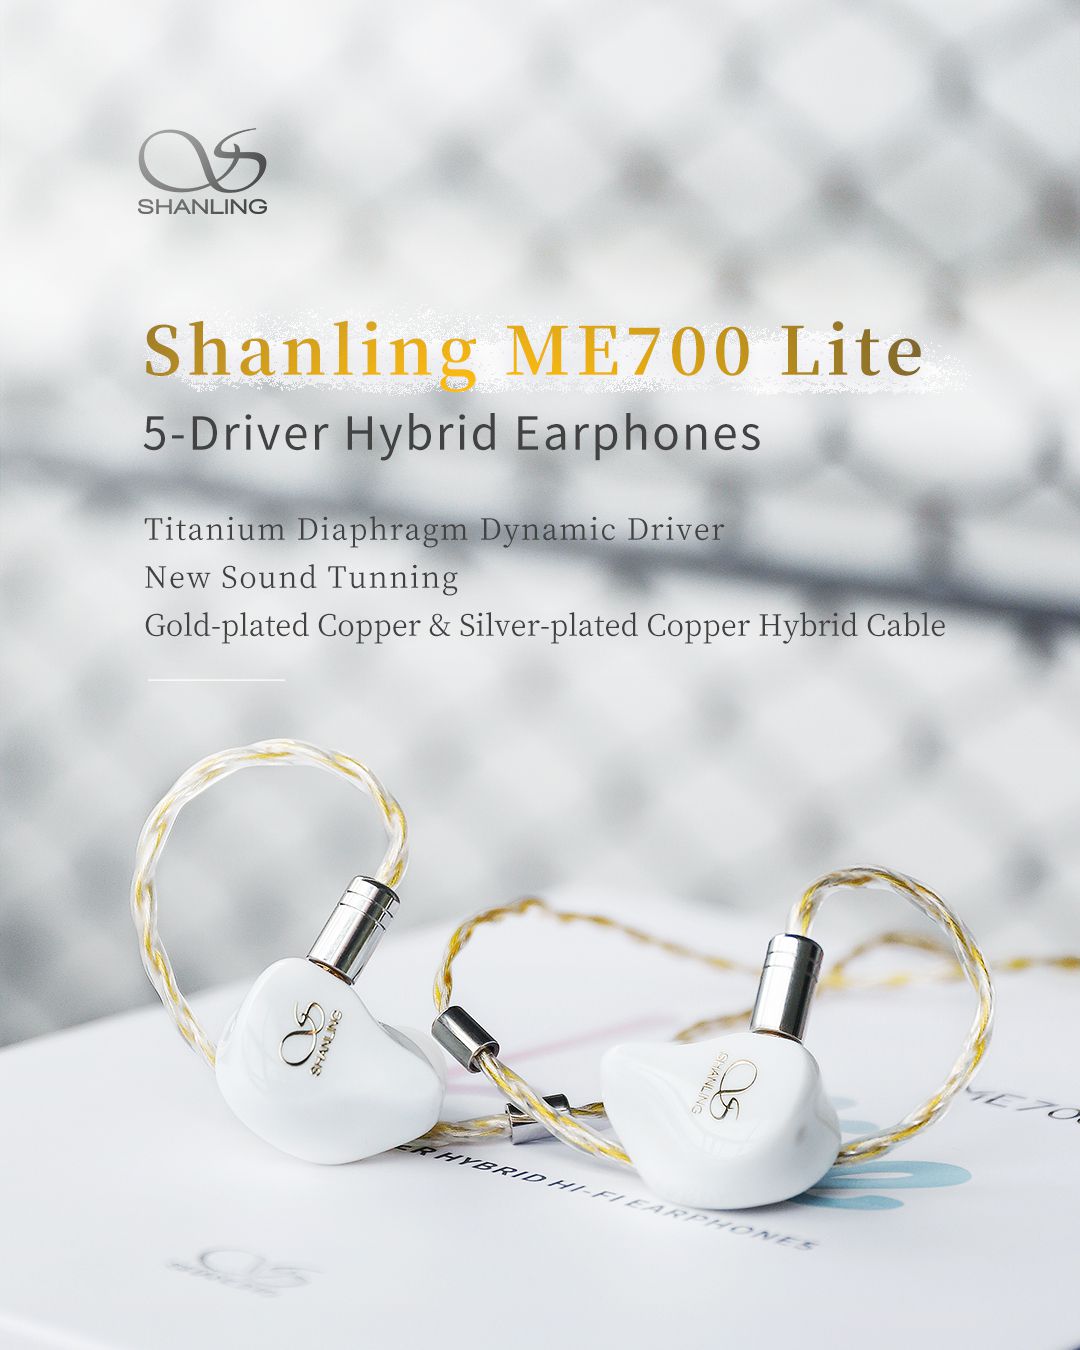 Introducing Shanling ME700 Lite